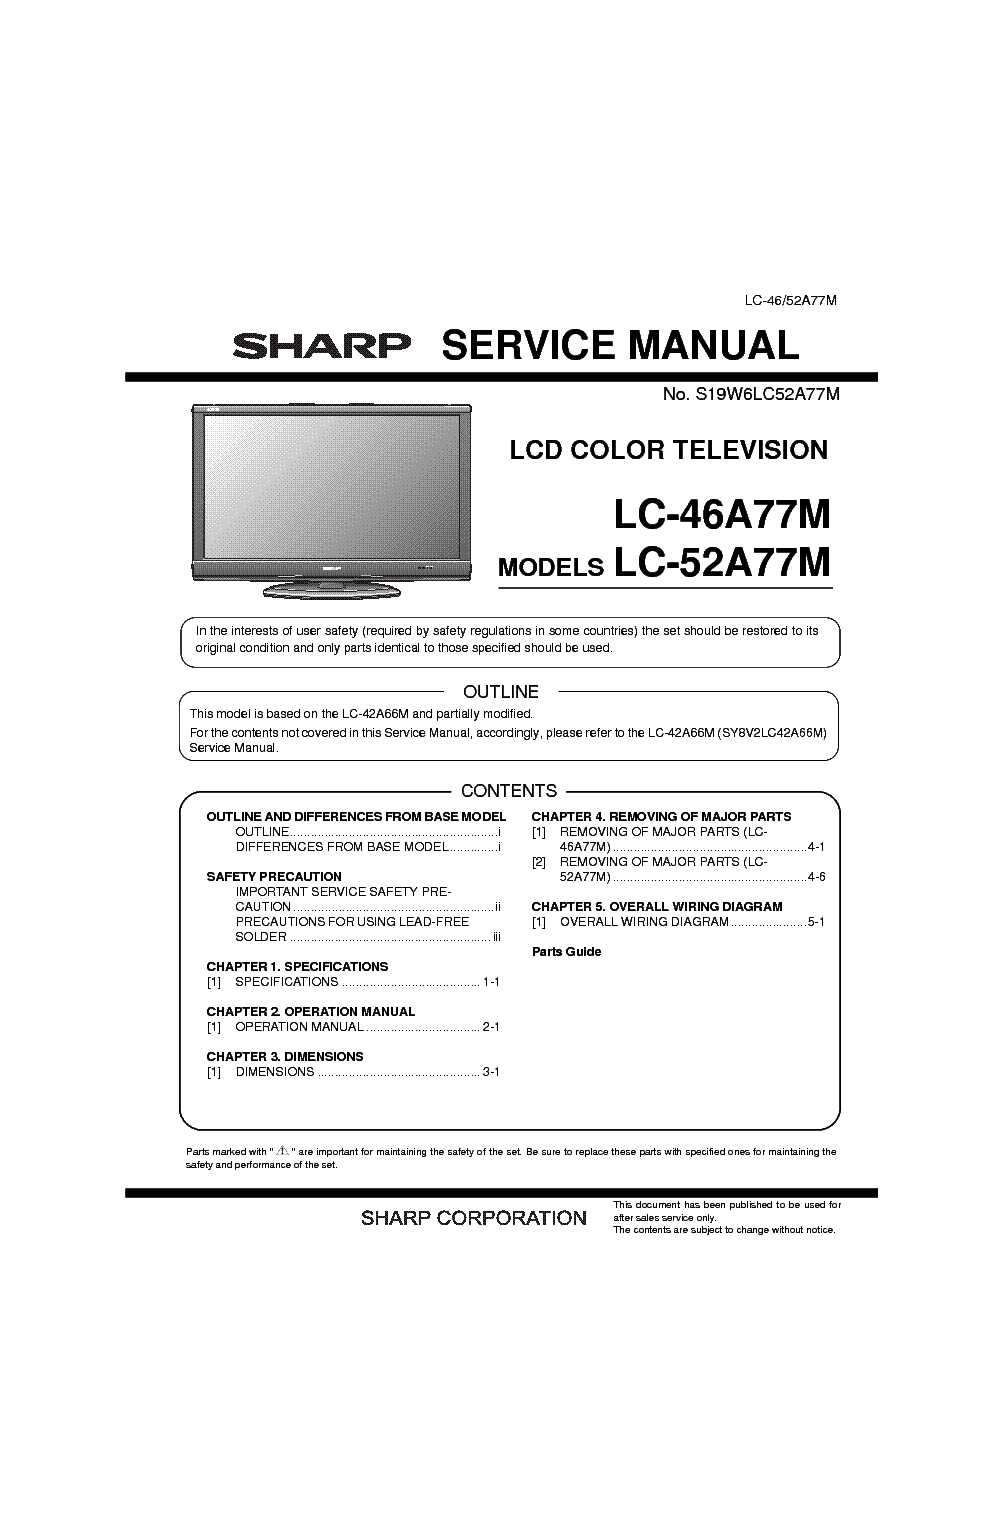 SHARP LC46-52A77M SM GB service manual (1st page)